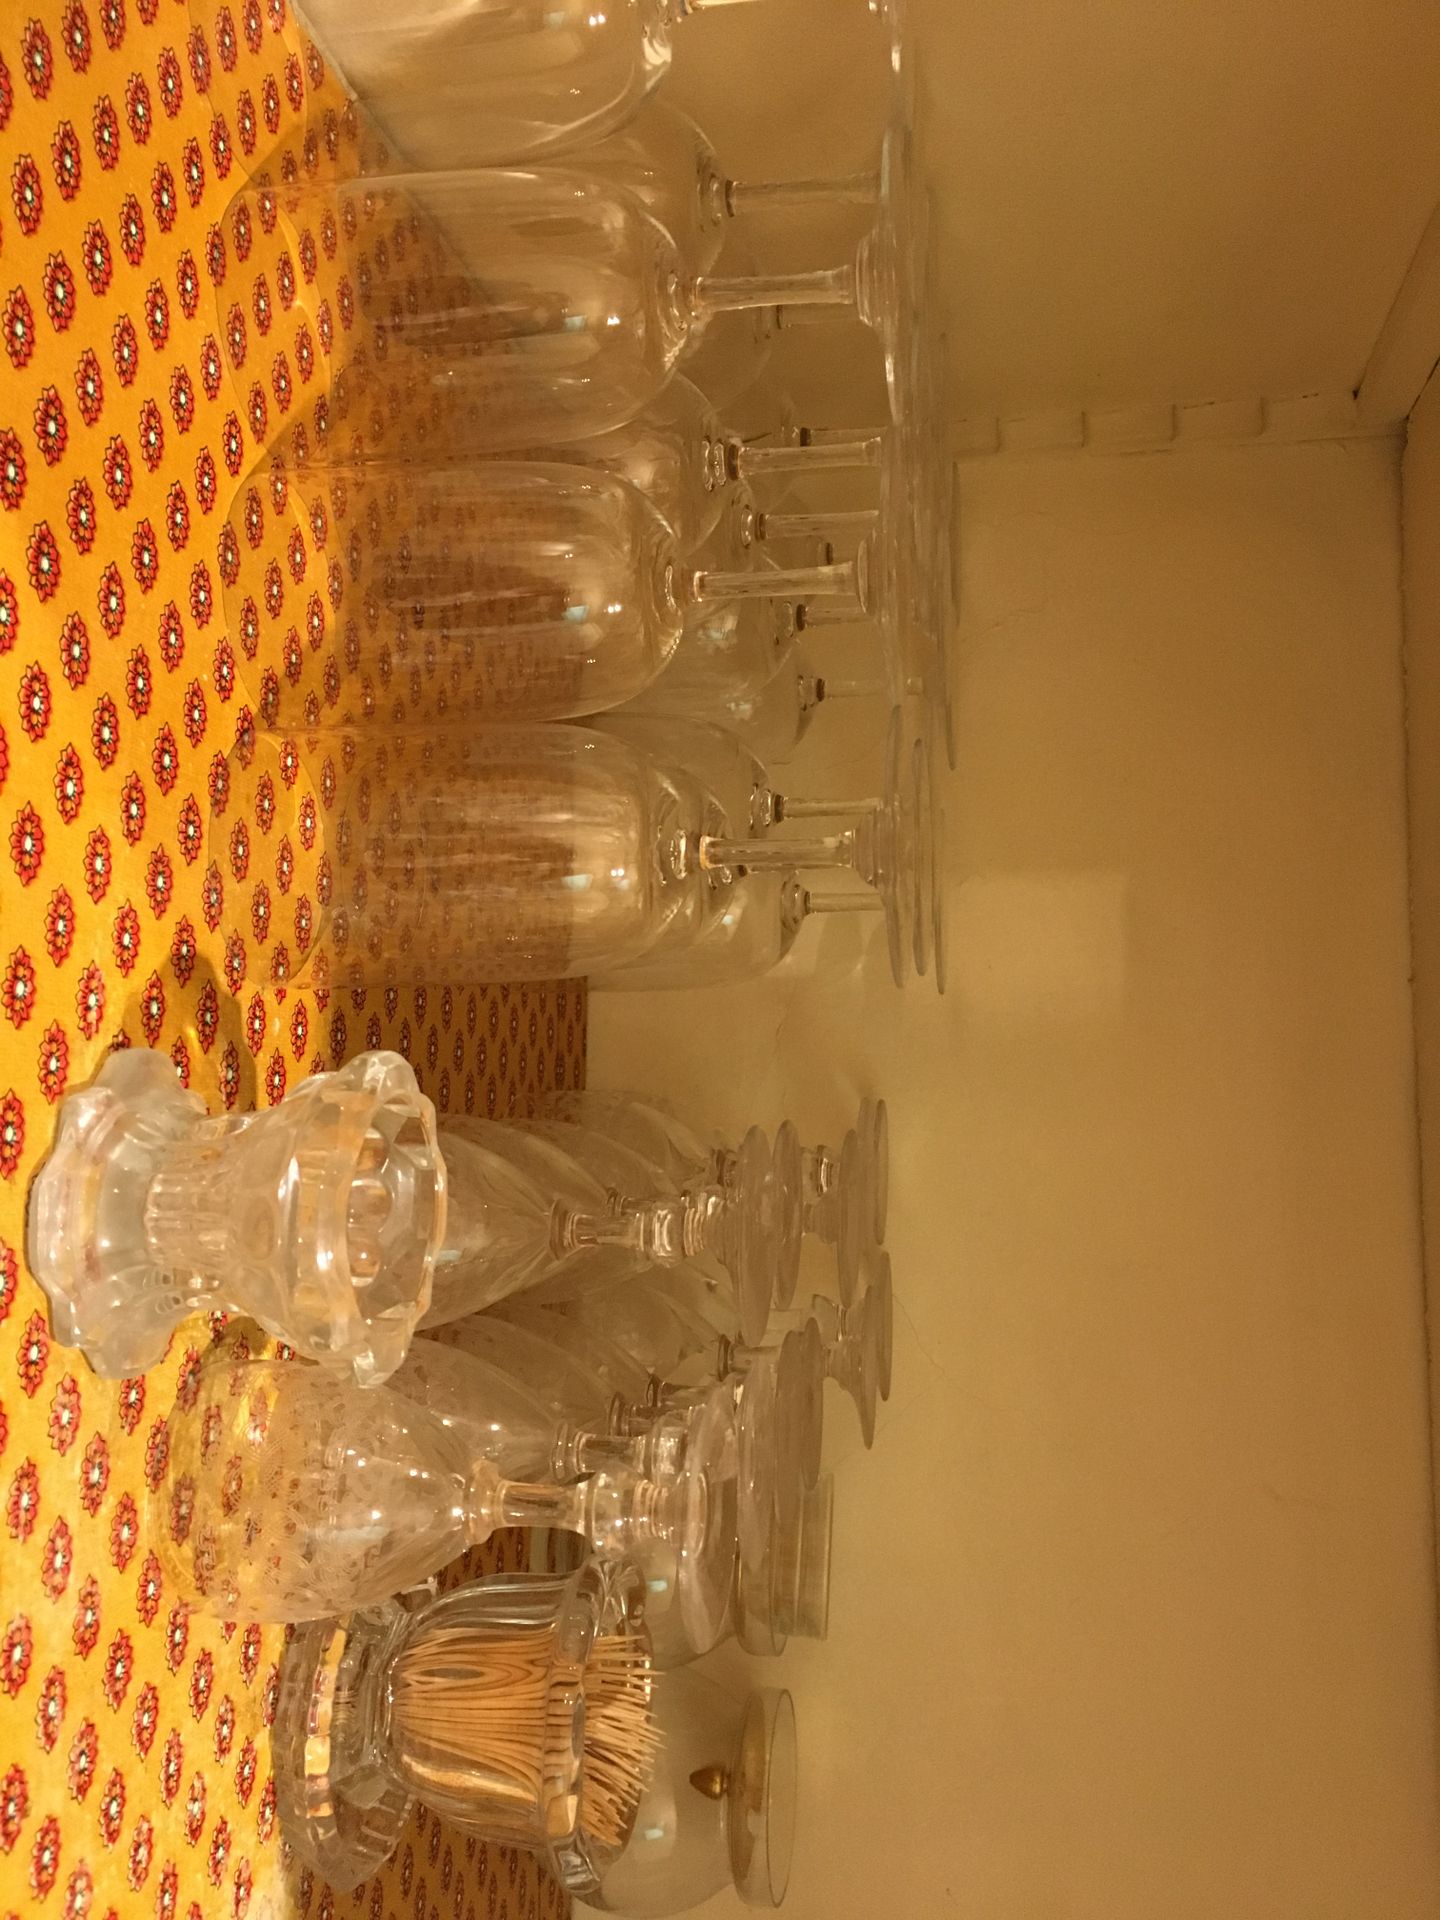 Null 批量玻璃器皿包括巴卡拉有柄玻璃杯(约14只)、带钻石尖端的玻璃杯、花瓶、各种玻璃杯。

联合：一套面包和沙拉盘，其中一些带有Lalique法国的标记。